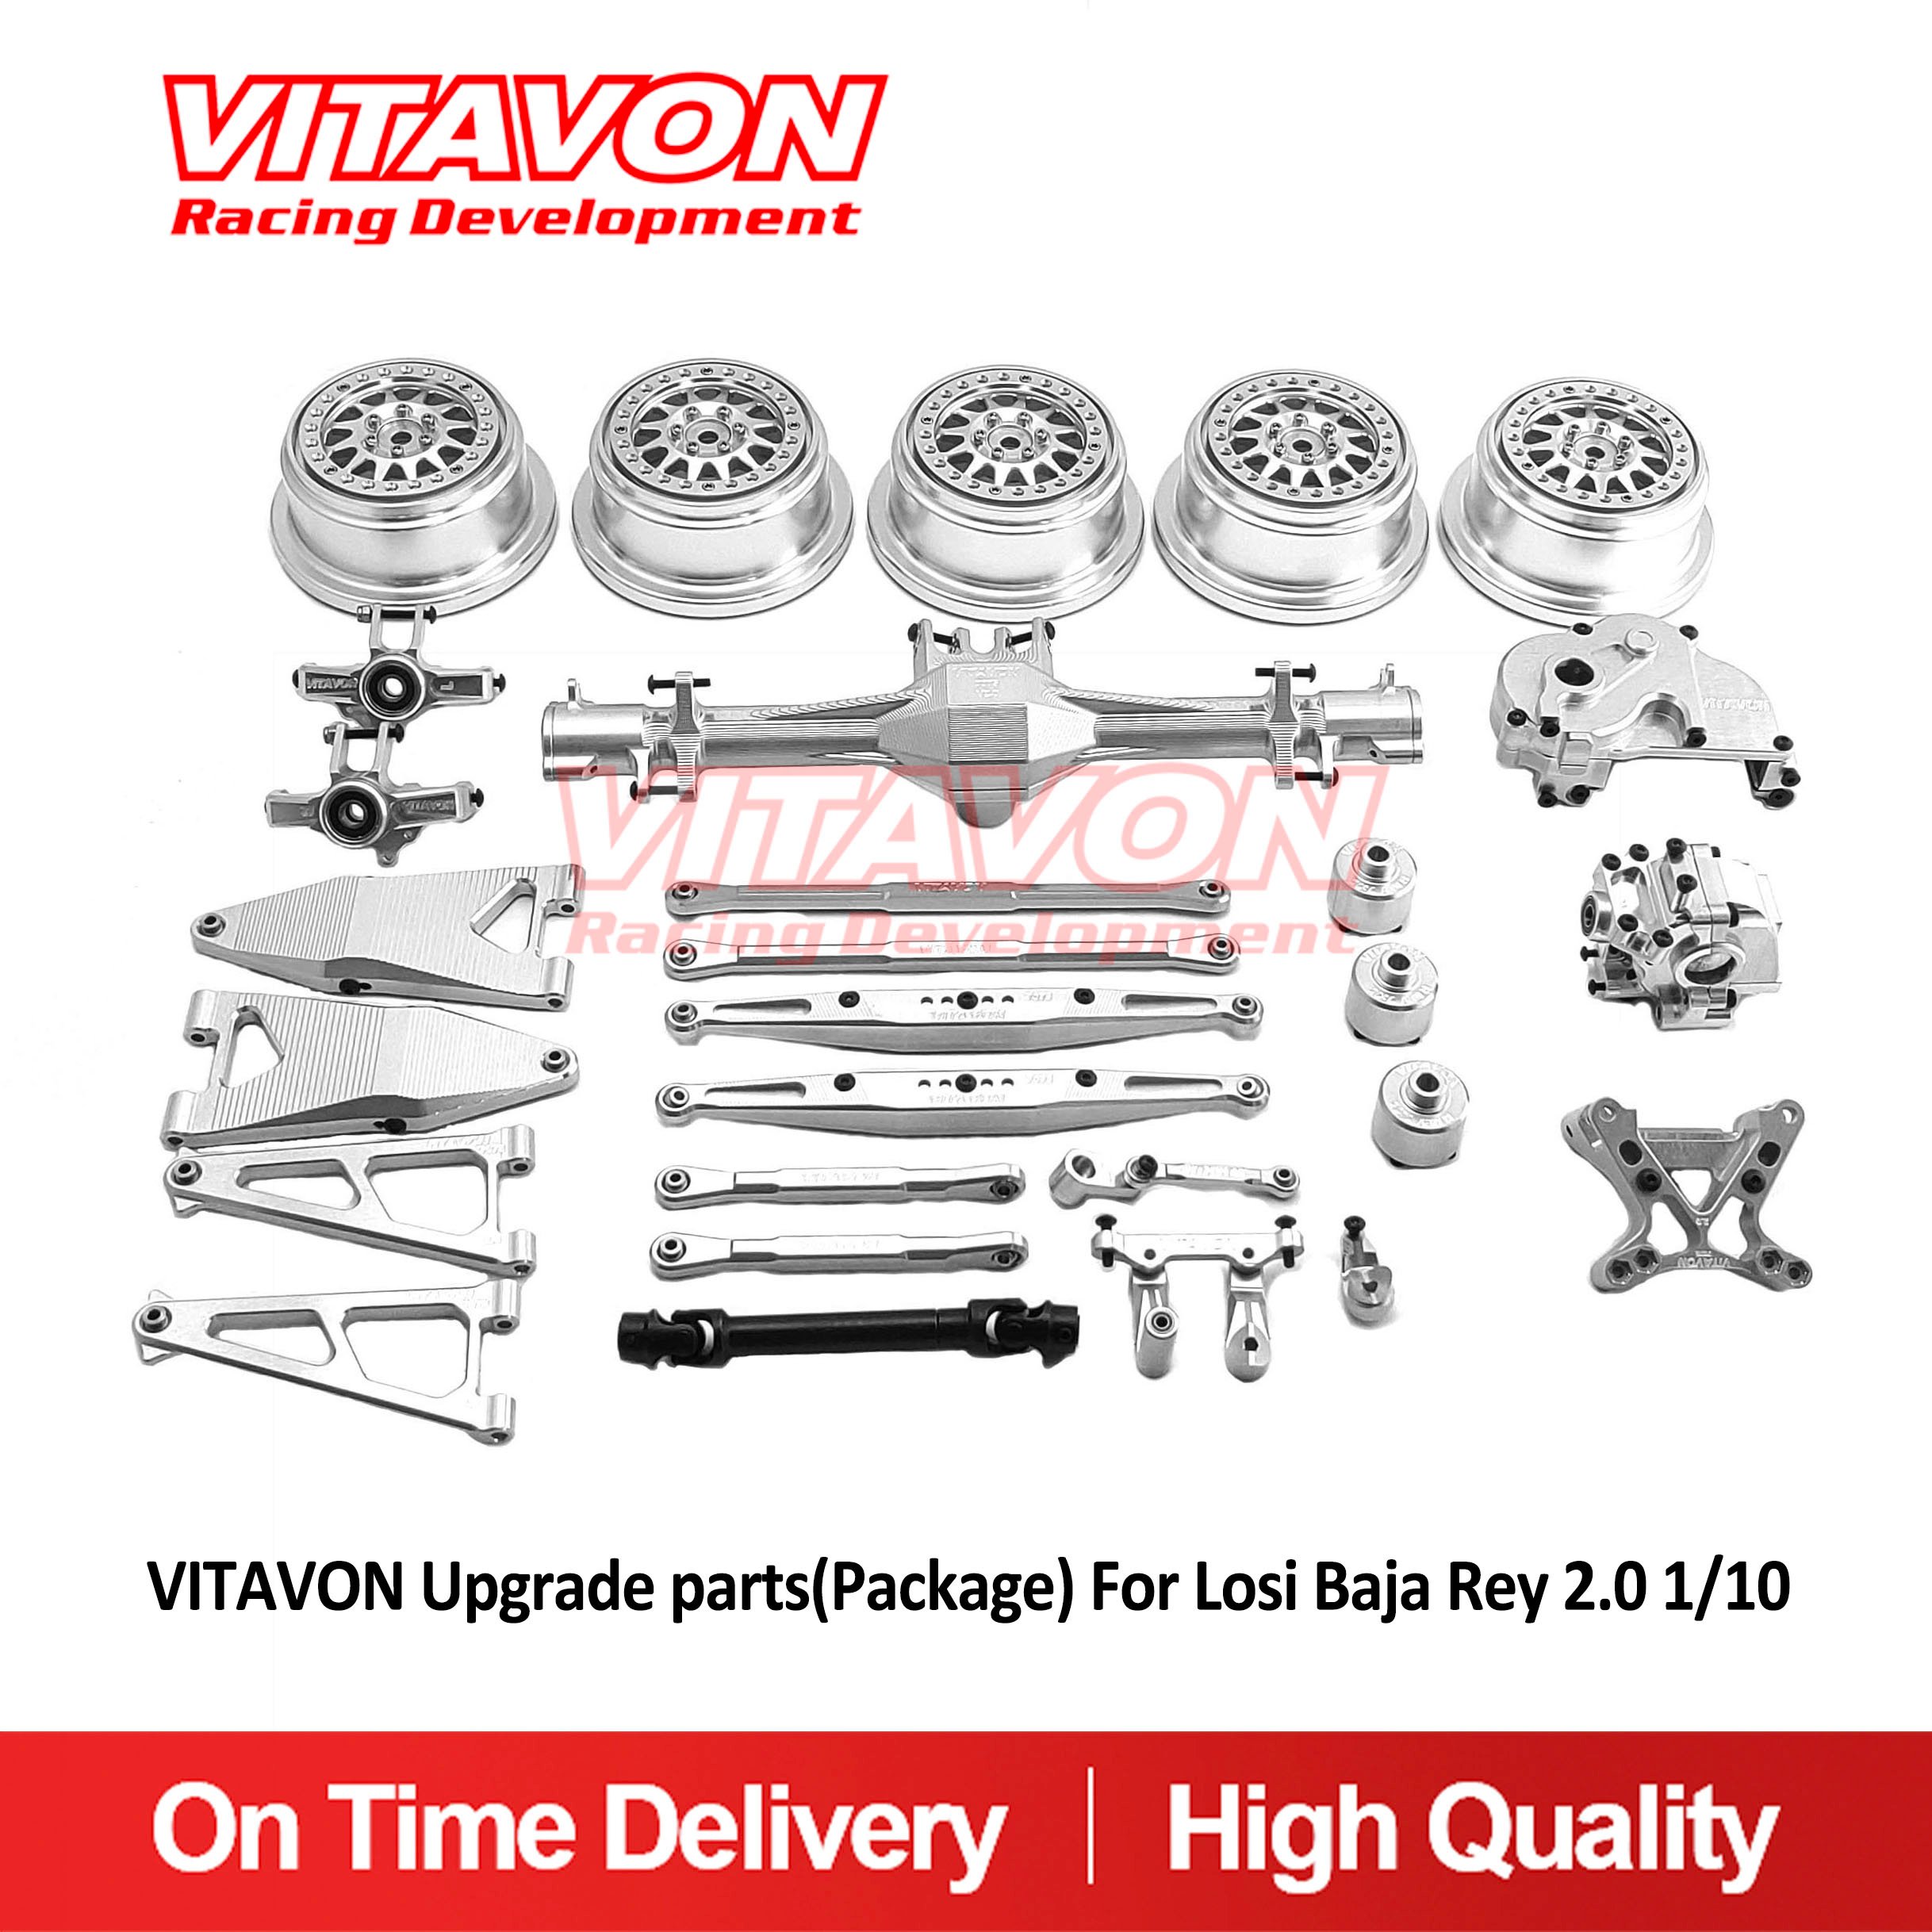 VITAVON Upgrade parts(Package) For Losi Baja Rey 2.0 1/10